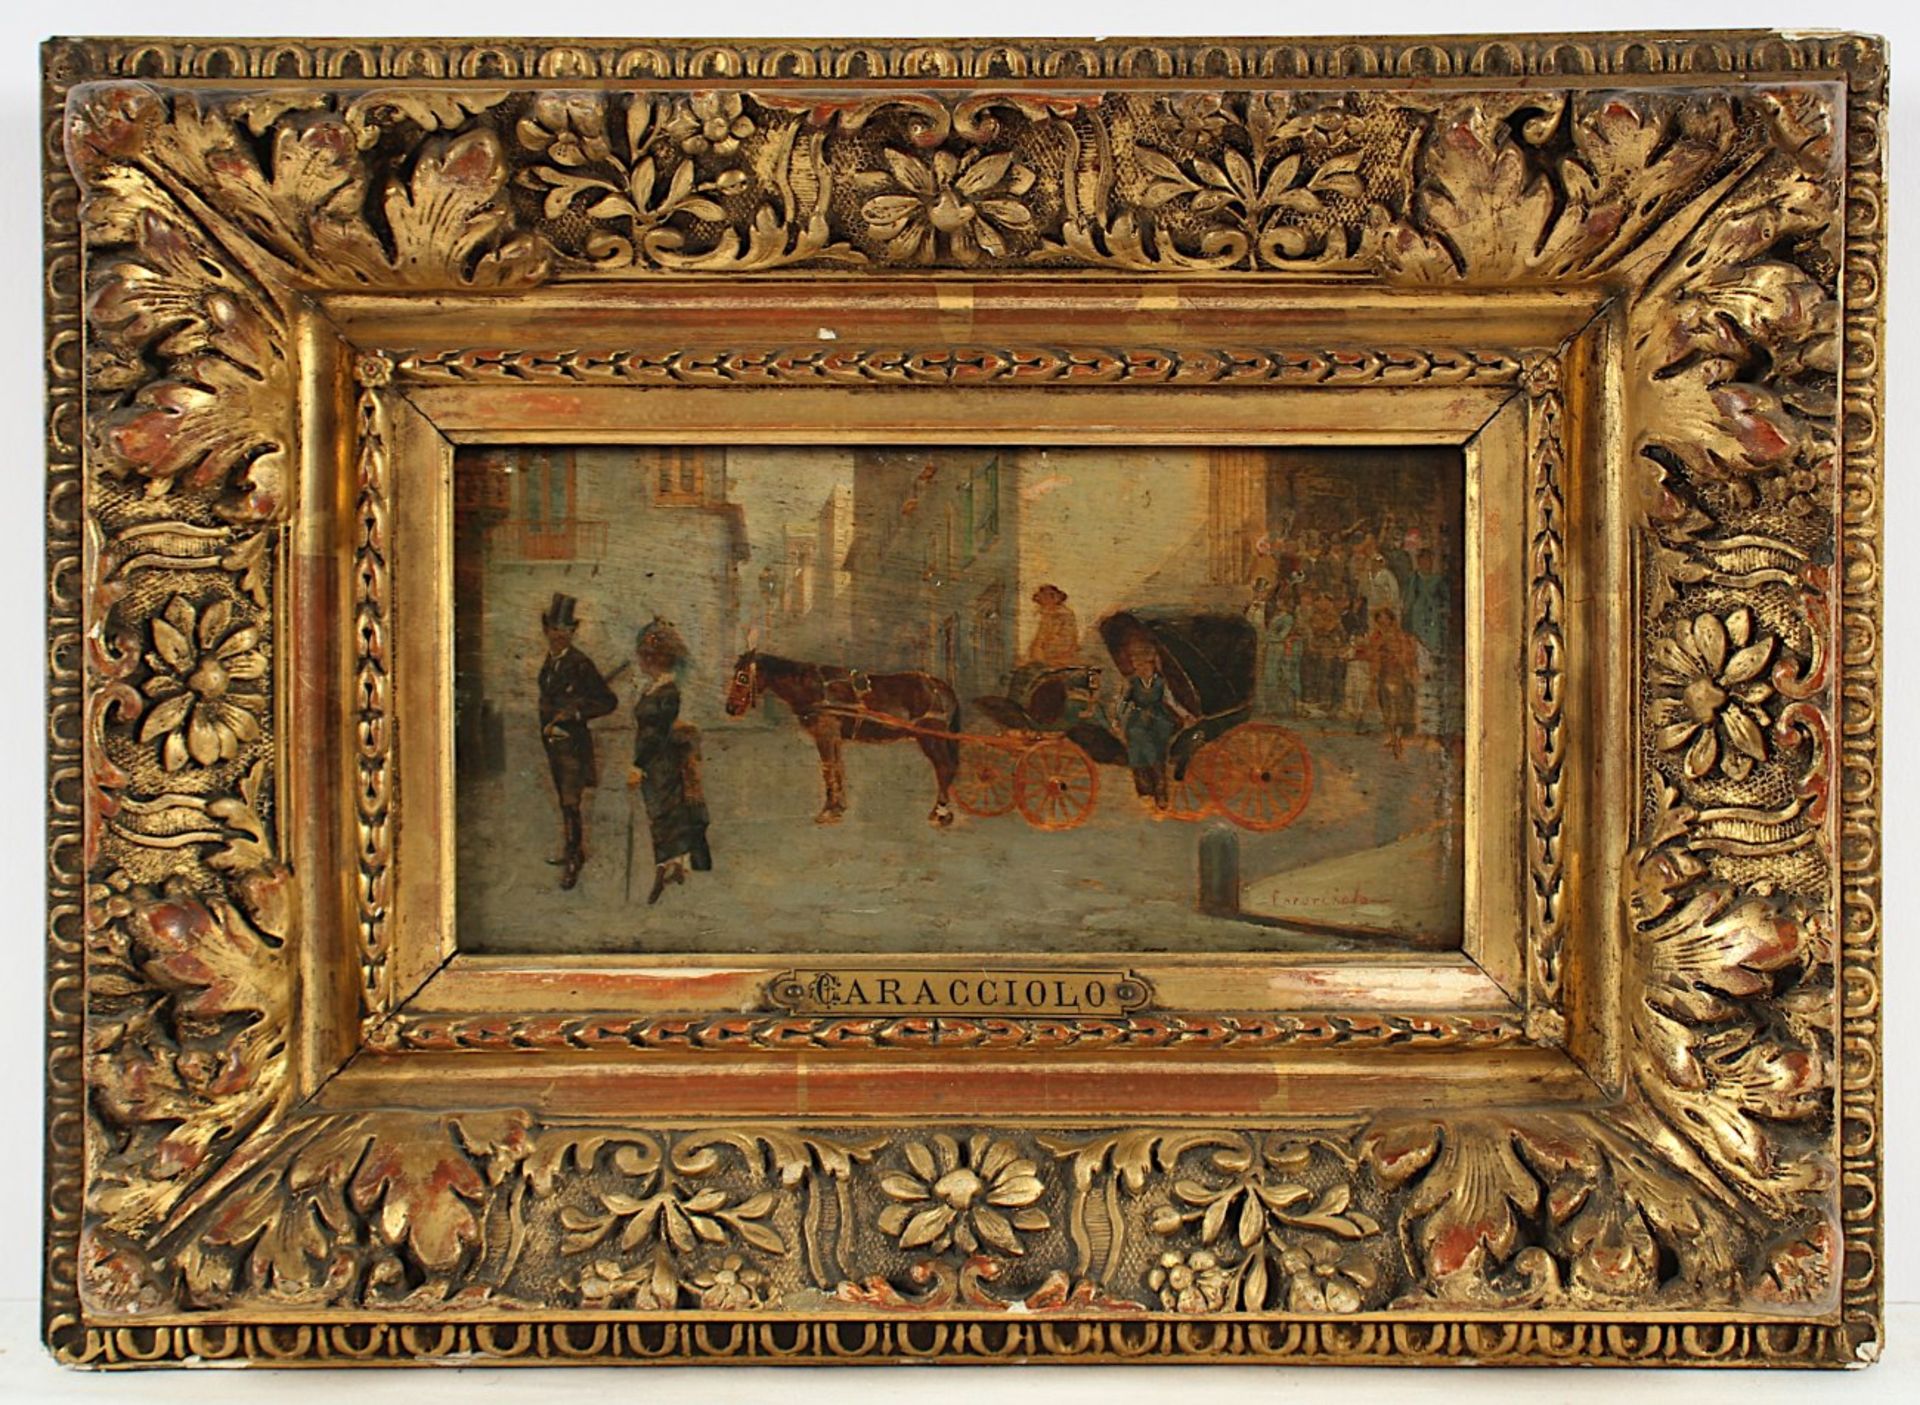 CARACCIOLO, Ottorino (1855-1880), "Stadtszene mit Kutsche", Öl/Holz, 9 x 18, besch., unten rechts